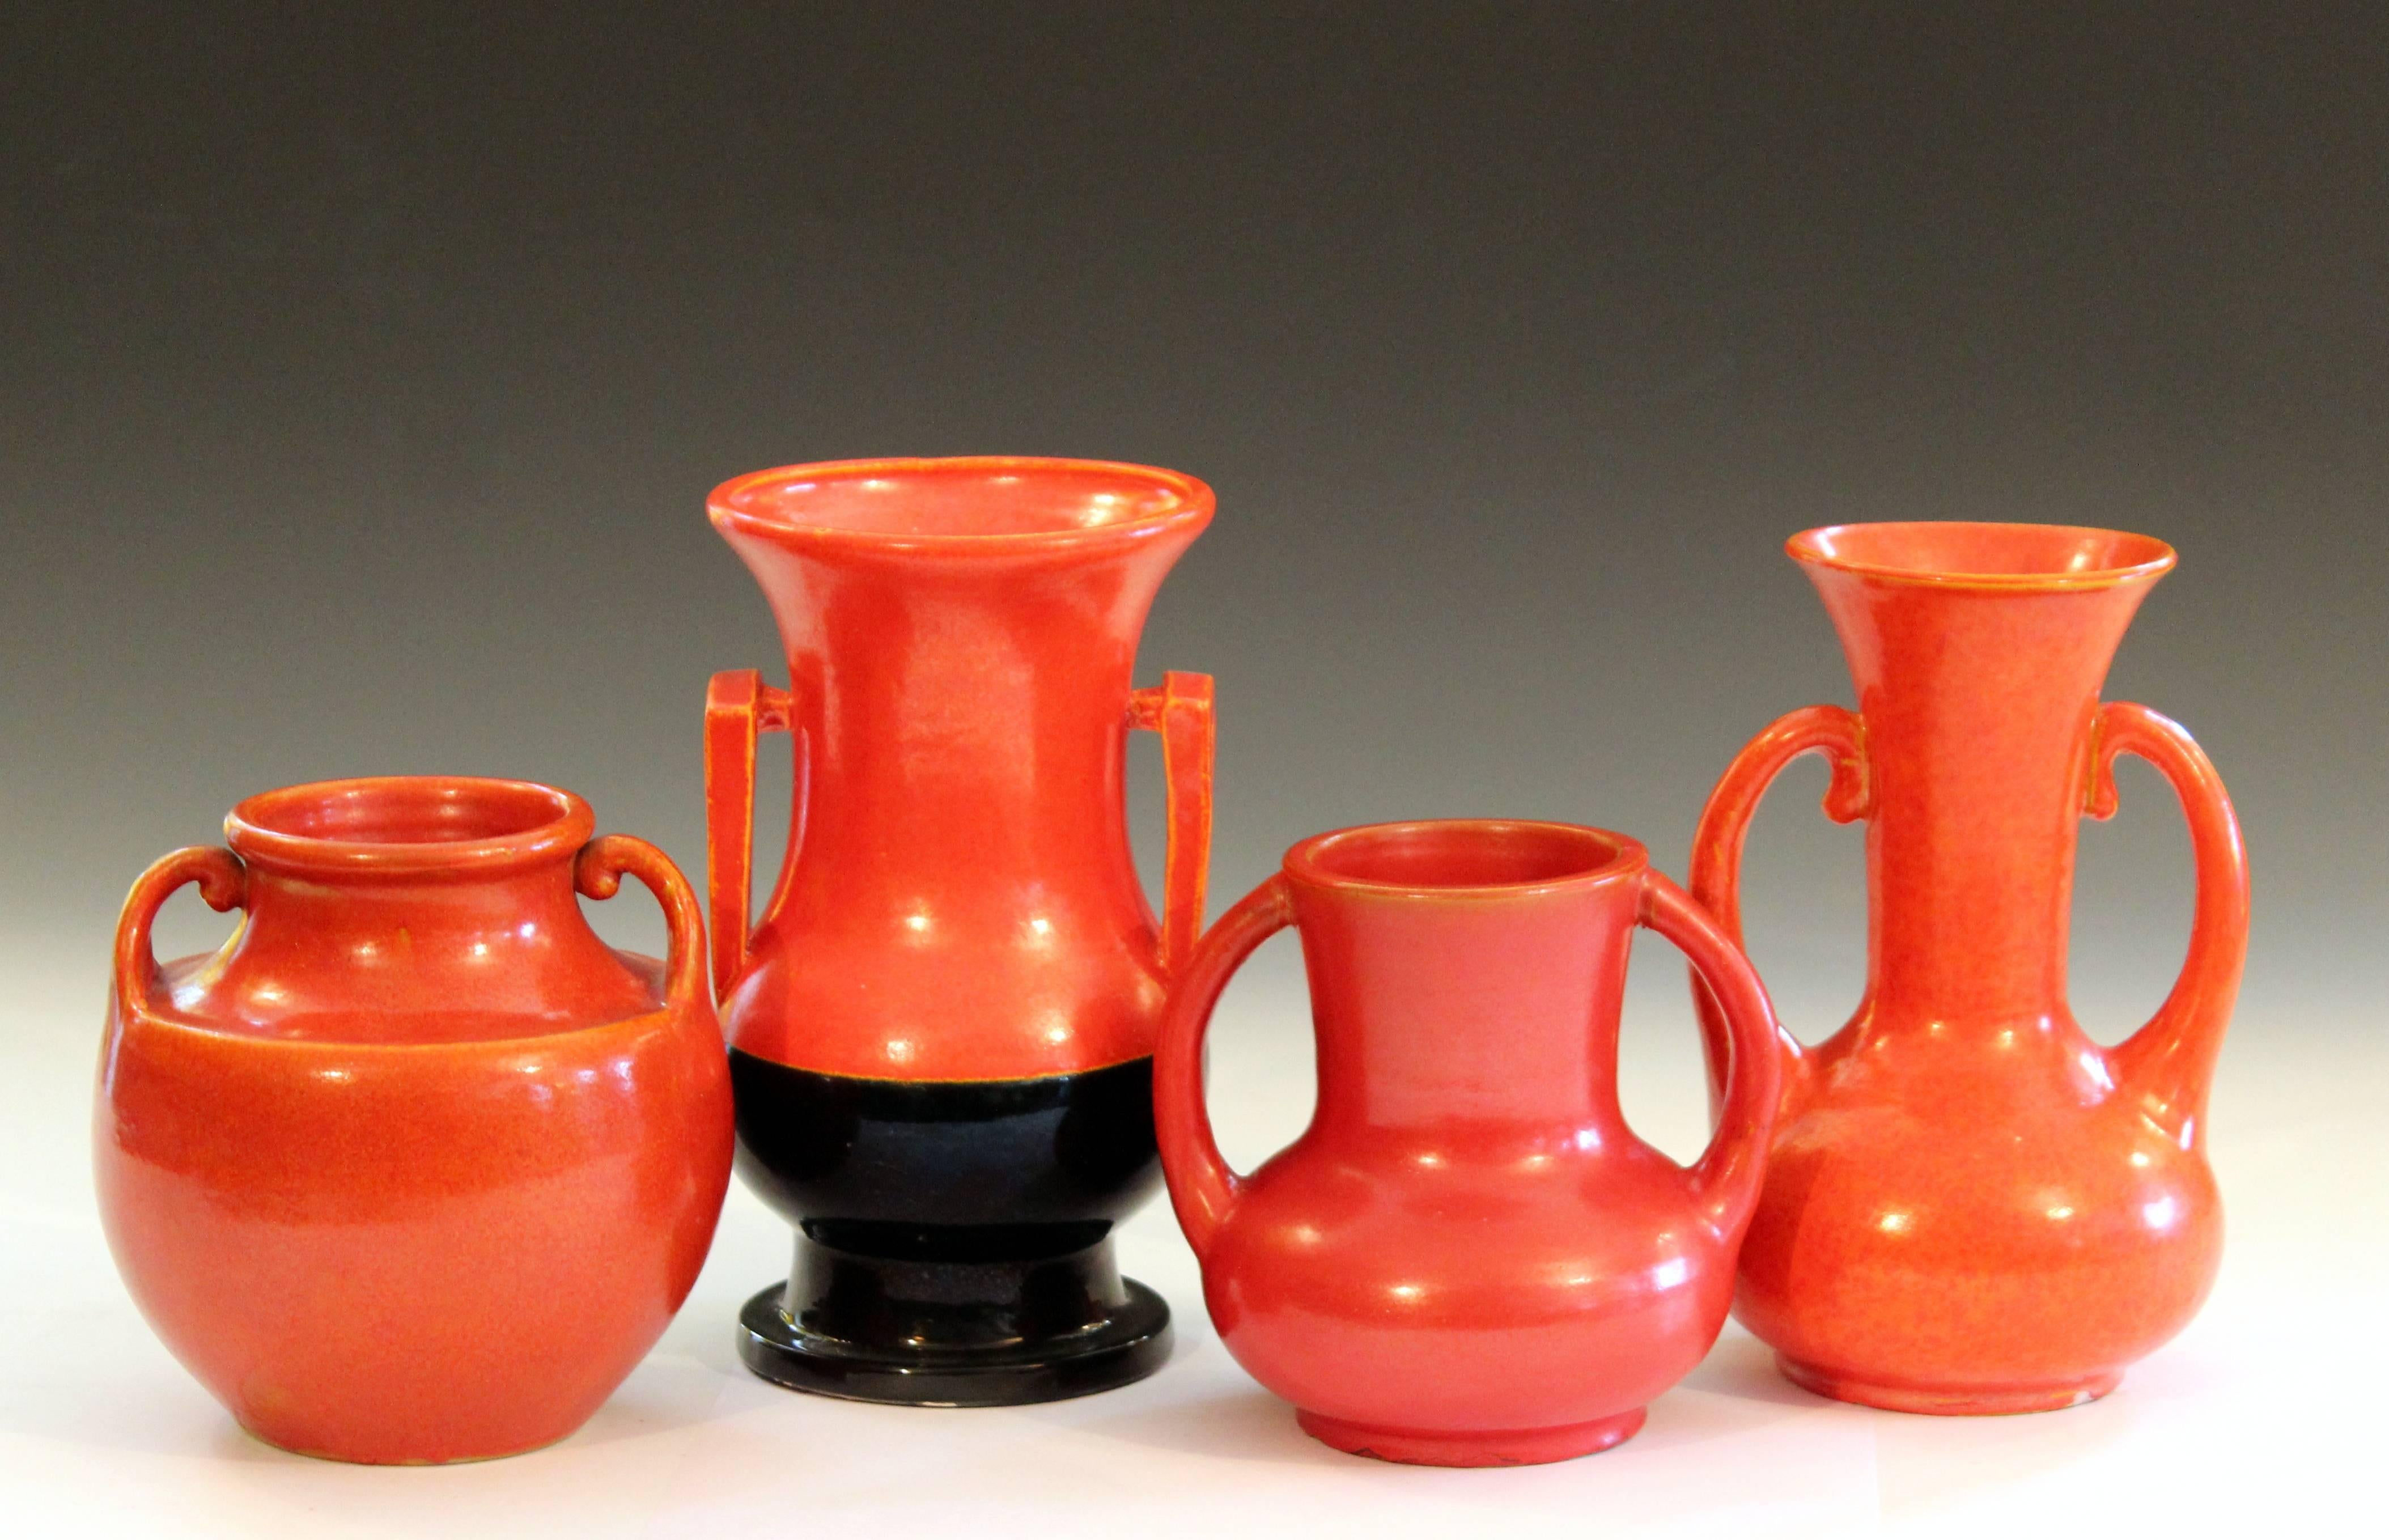 Awaji Pottery Orange Art Deco Japanese Vintage Crystalline Atomic Glaze Vase For Sale 1